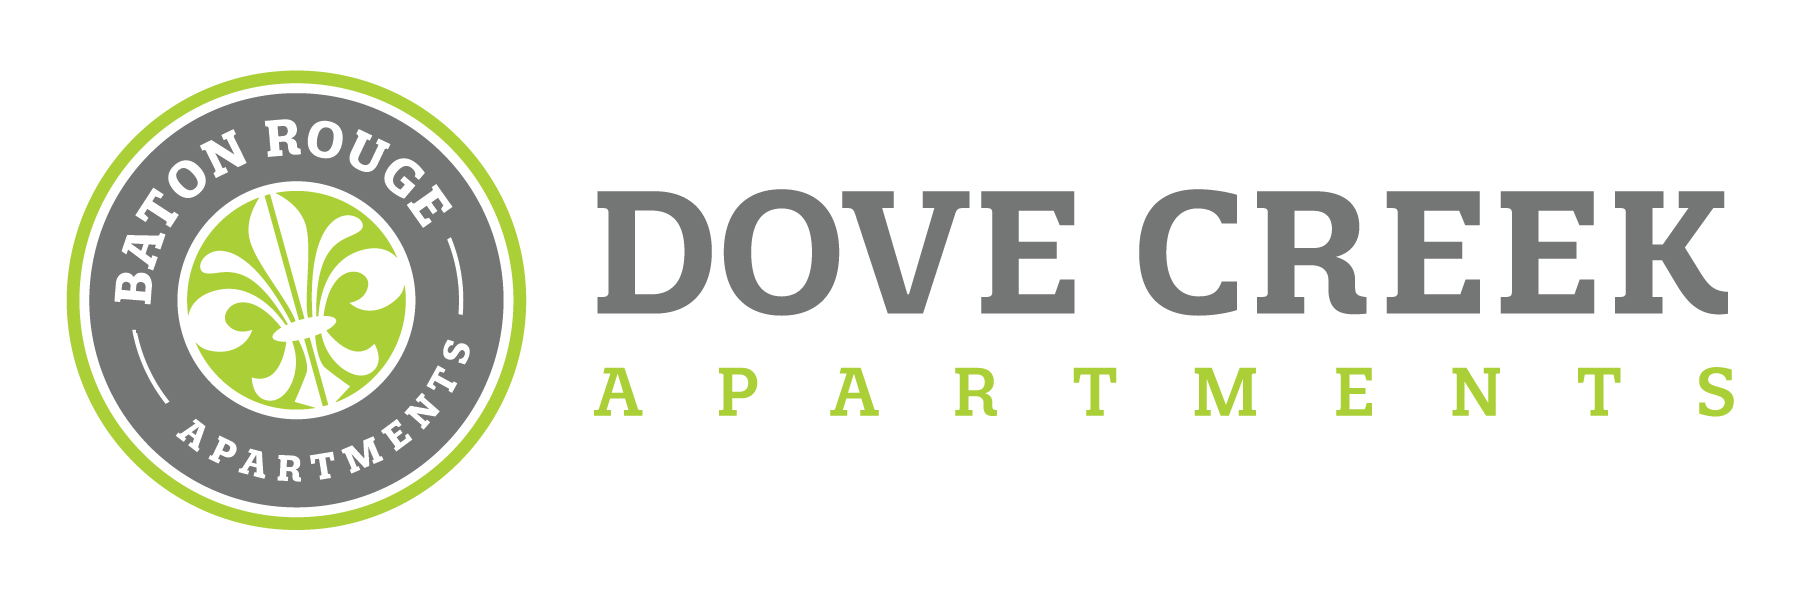 Dove Creek Apartments in Baton Rouge, LA